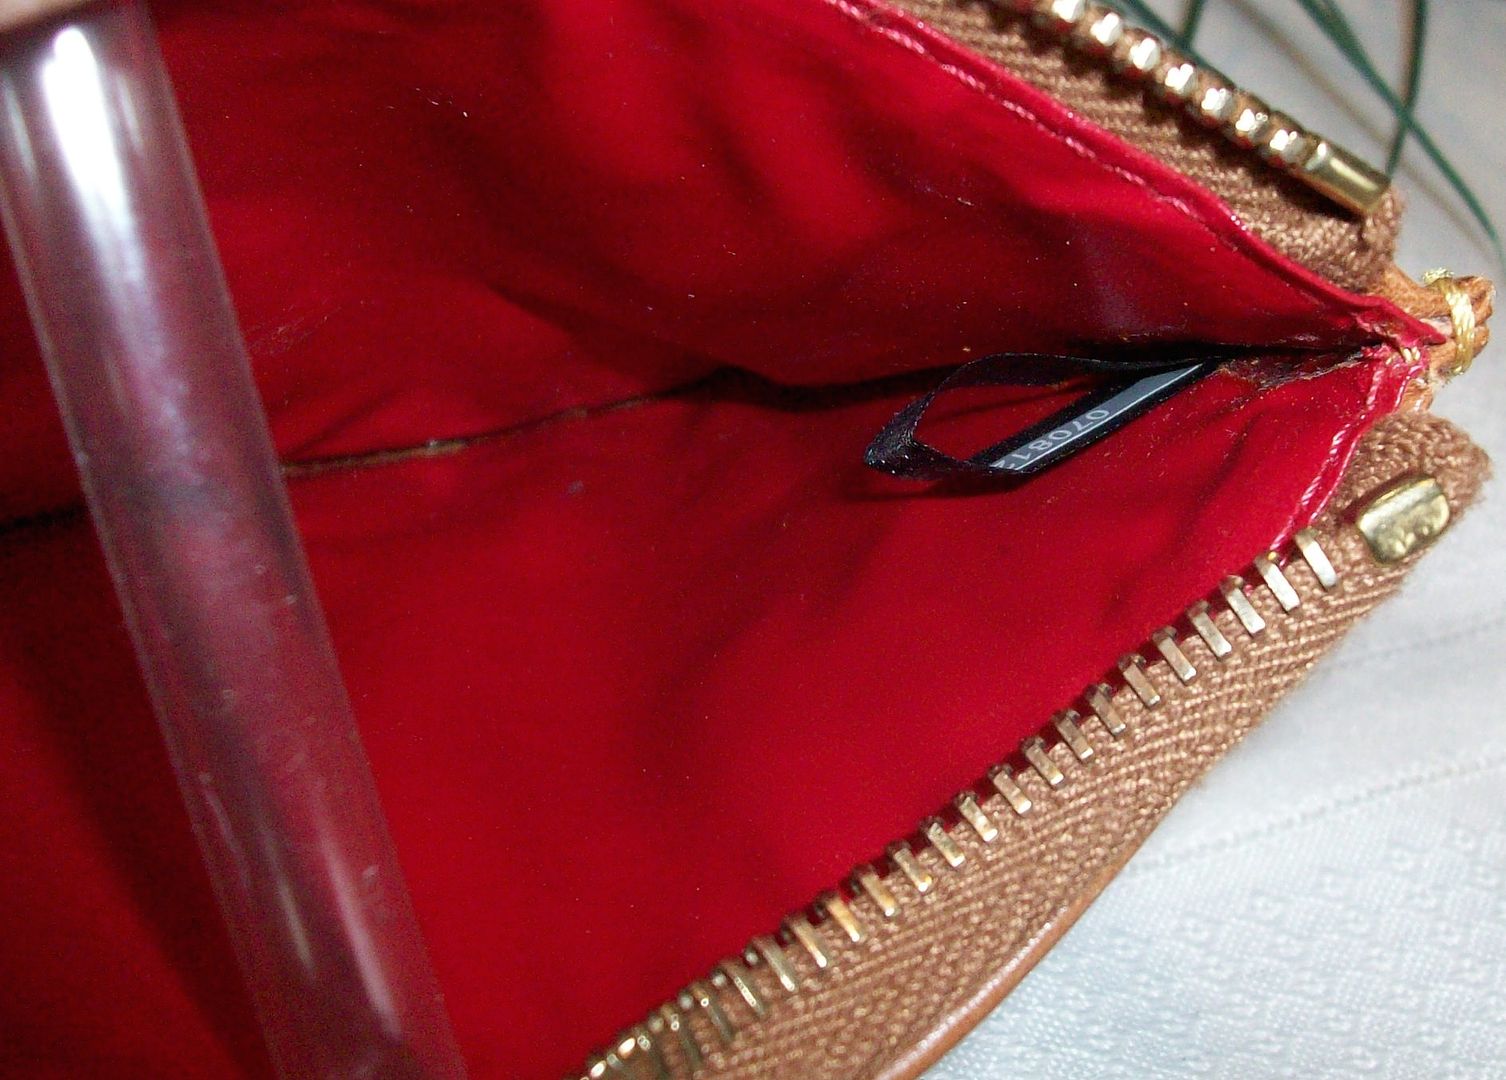 dooney textured leather zip top coin purse black tag photo 100_0661.jpg